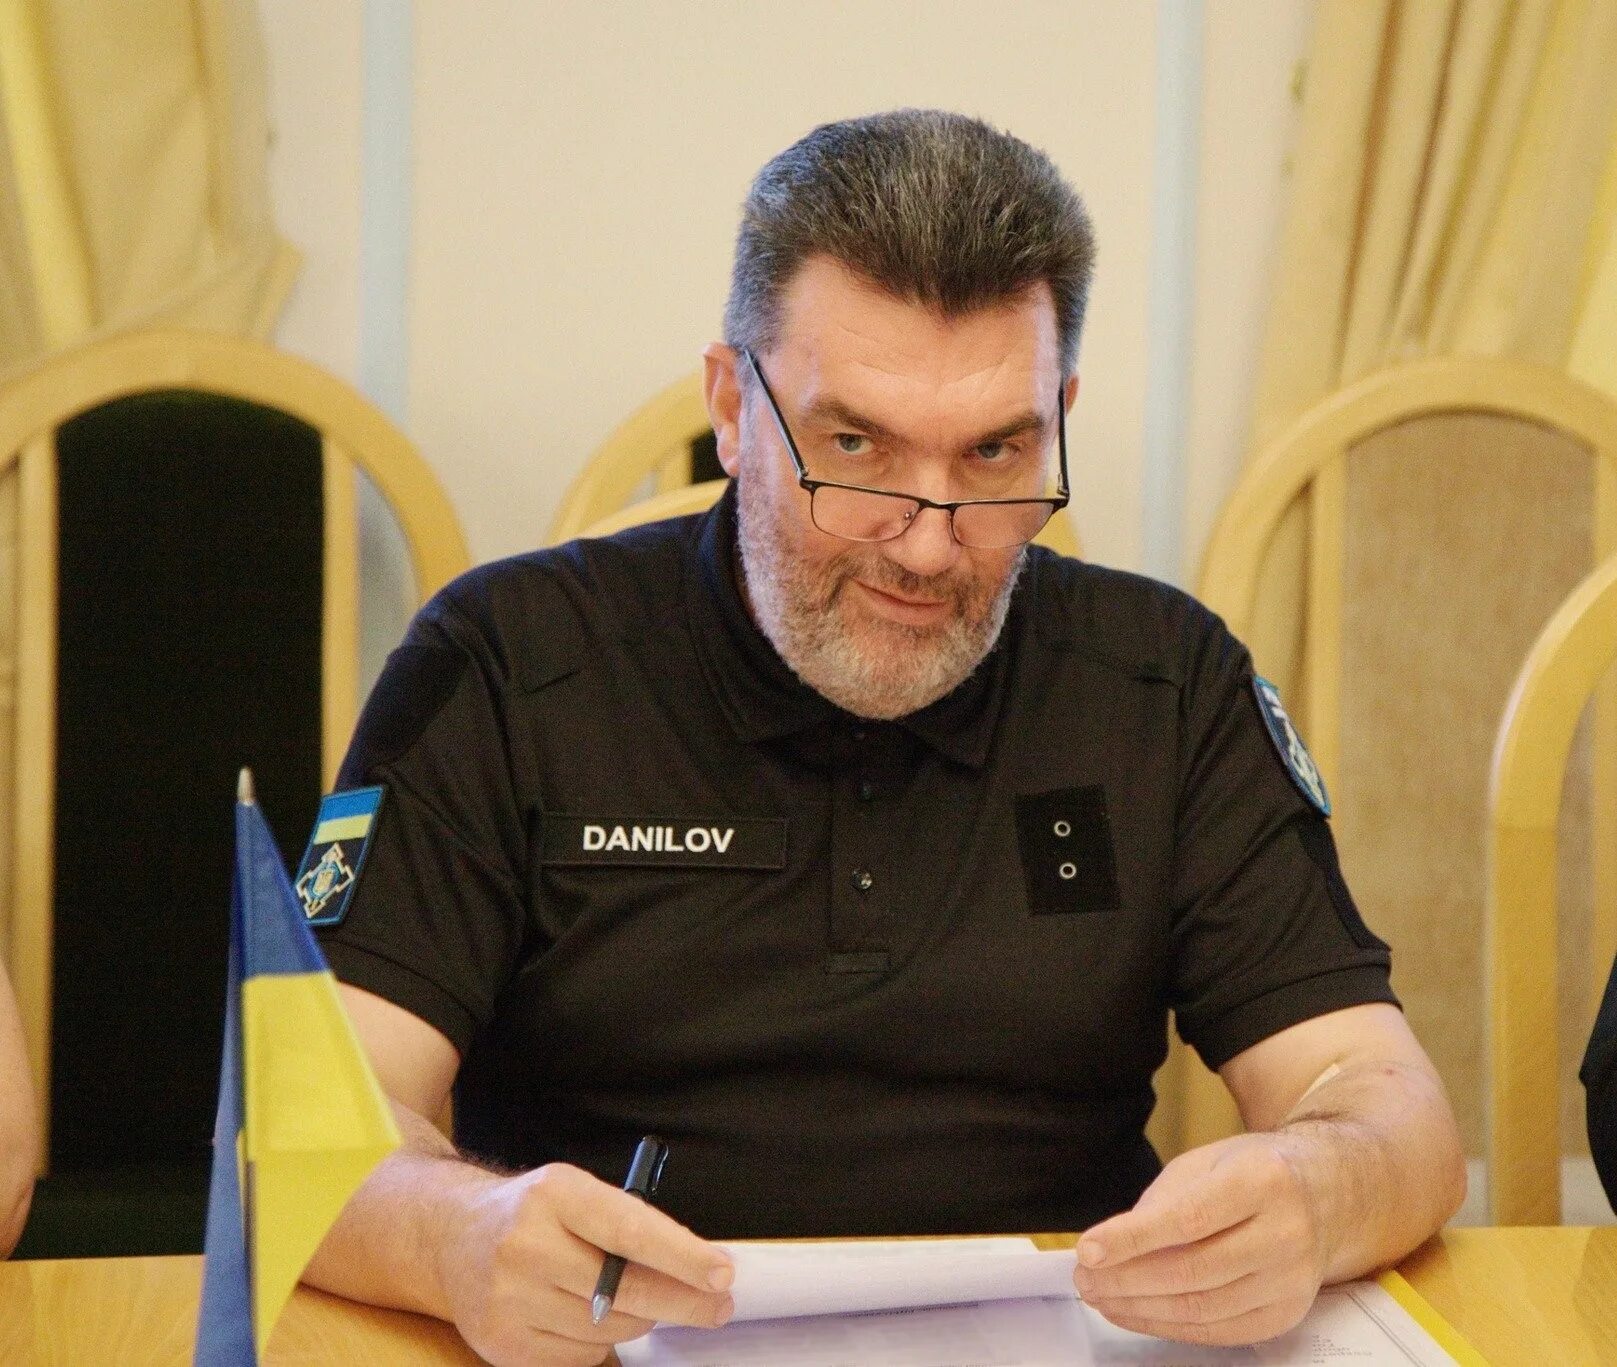 Данилов Украина секретарь СНБО. Данилов глава СНБО.